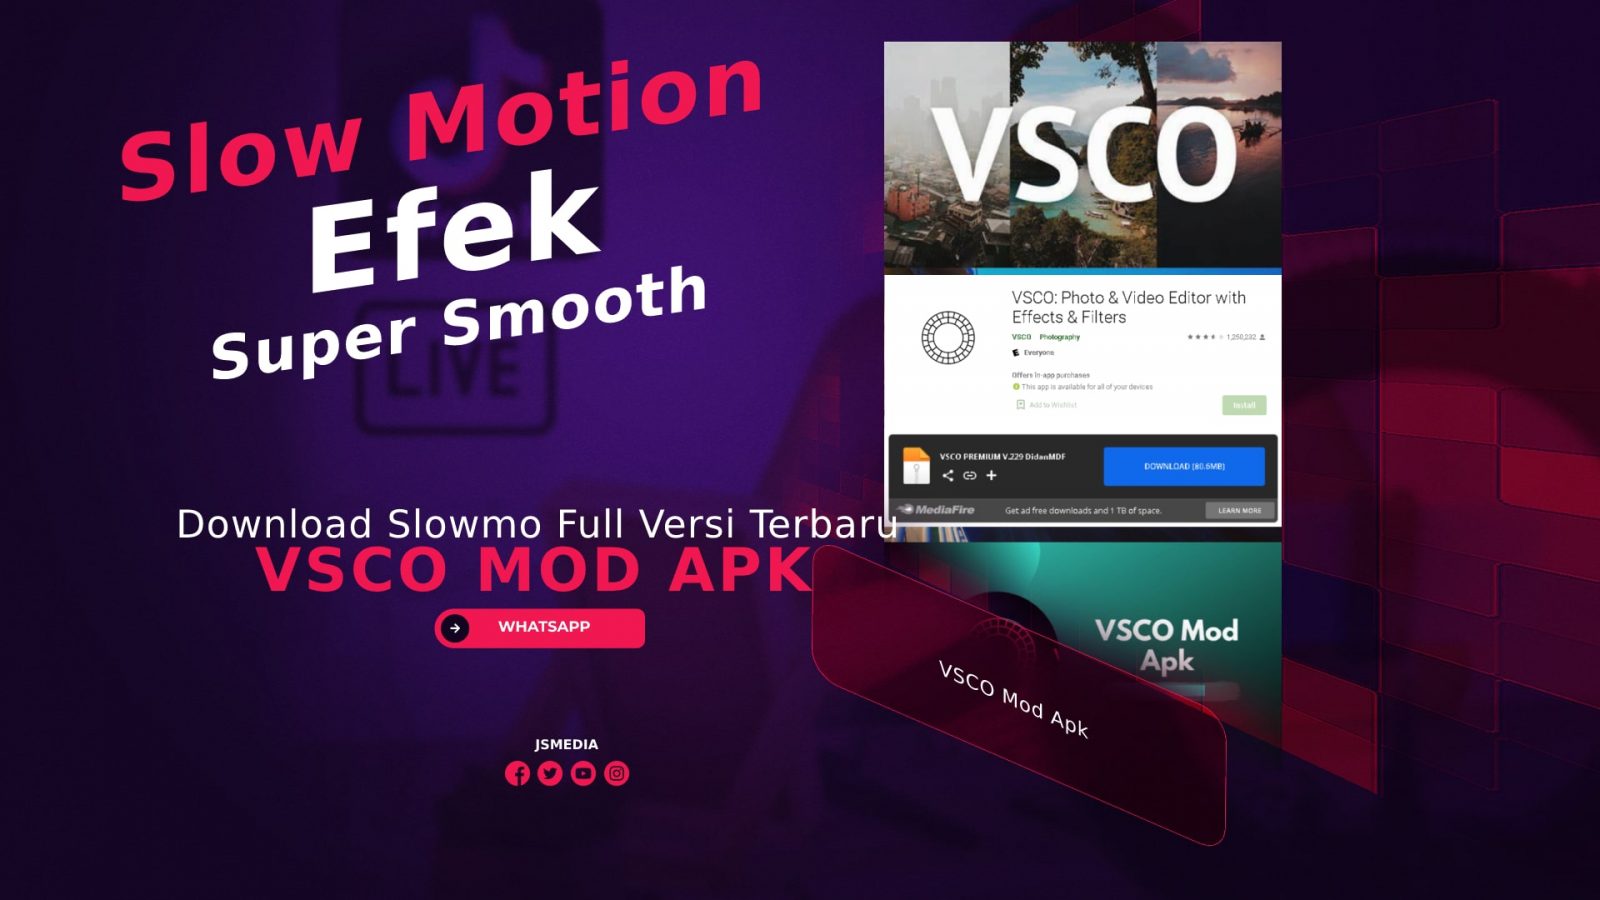 Download VSCO Mod Apk Slowmo Full Versi Terbaru Gratis, Efek Slow Motion Super Smooth